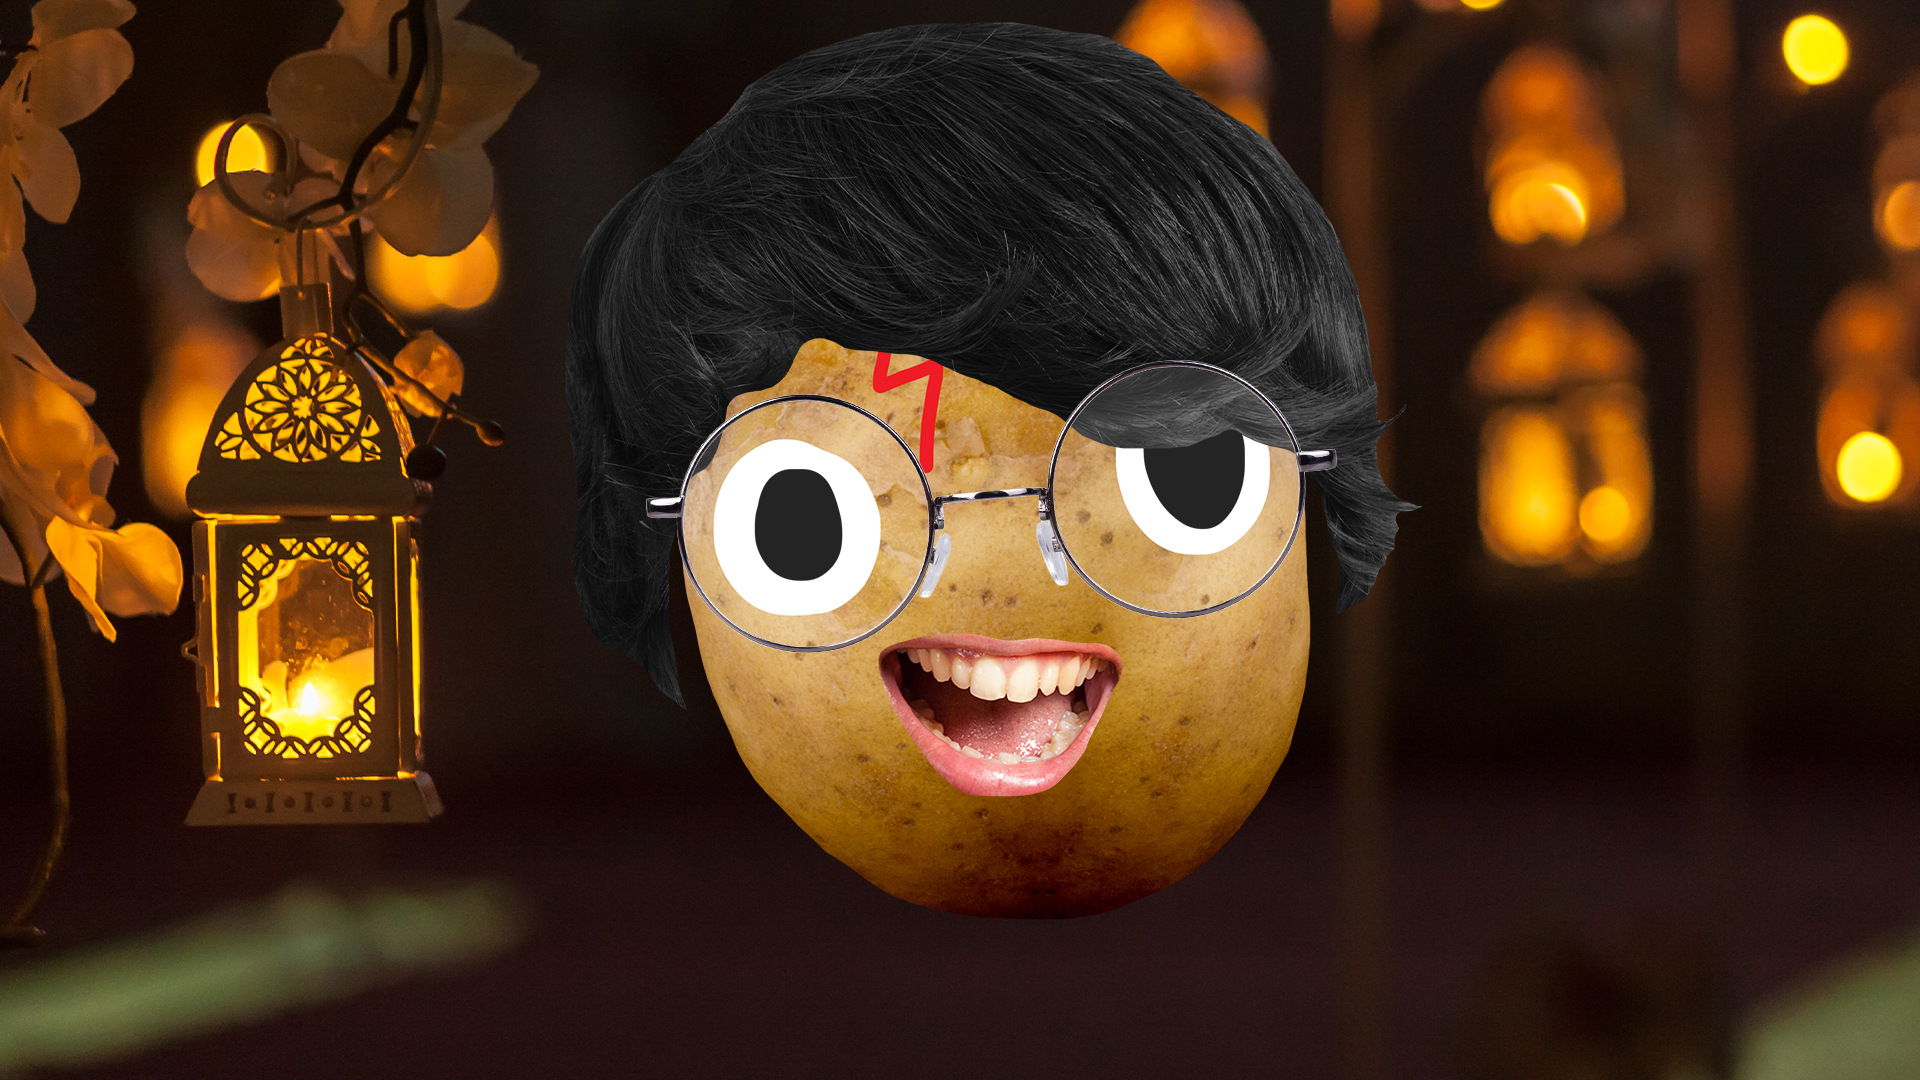 Potato Harry surrounded by wedding lanterns